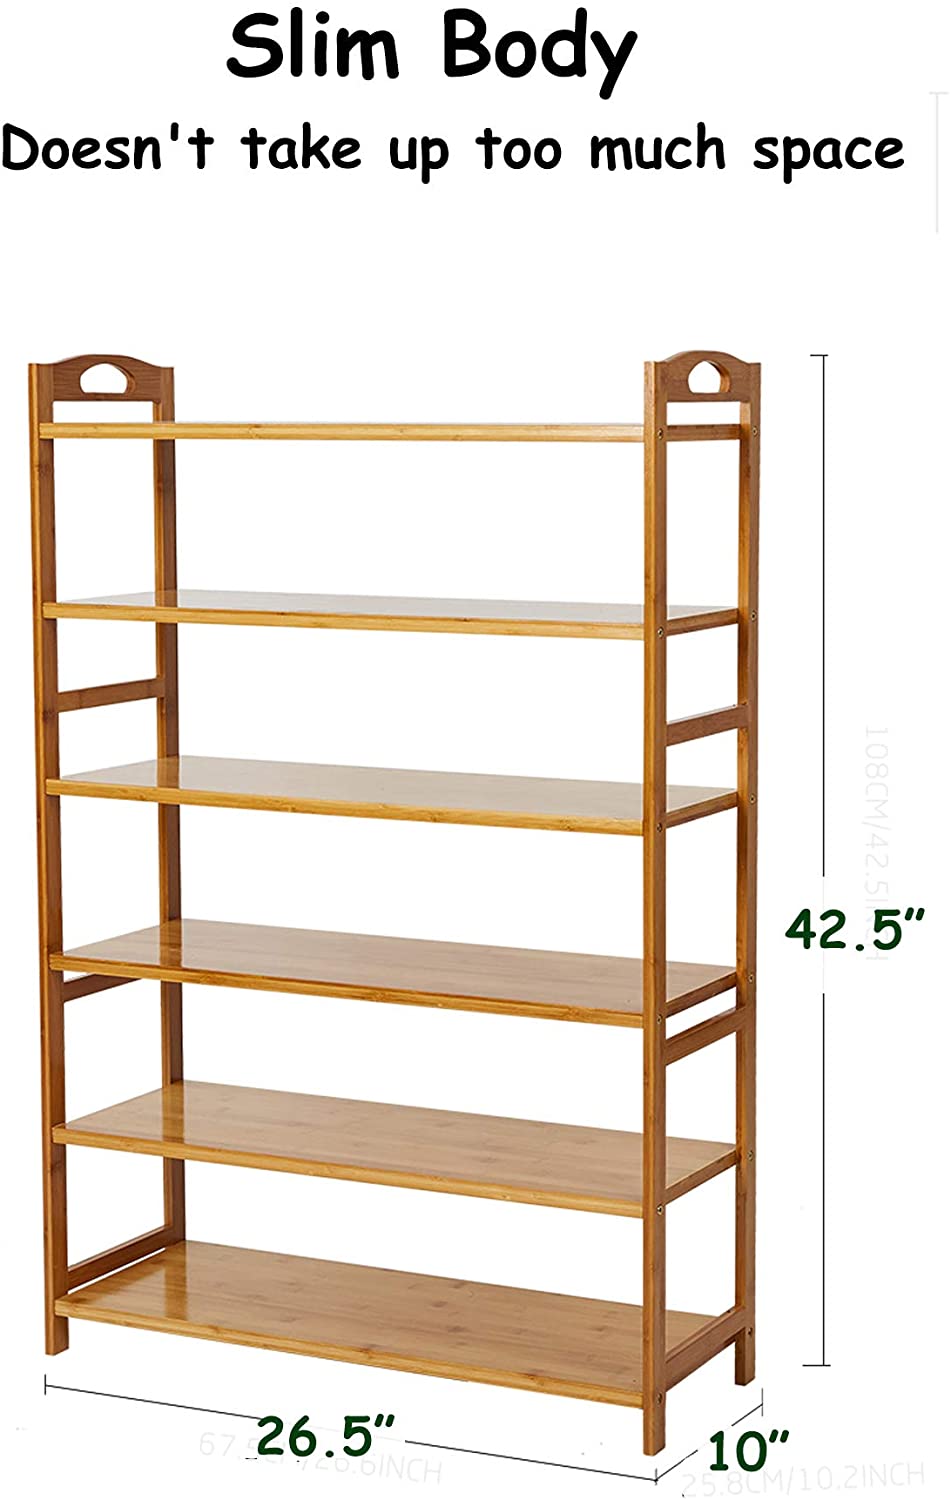 6-Tier Bamboo Shoe Rack Entryway Free Standing Shoe Shelf Storage Organizer for Home Office Bathroom, Plant Stand Bookshelf